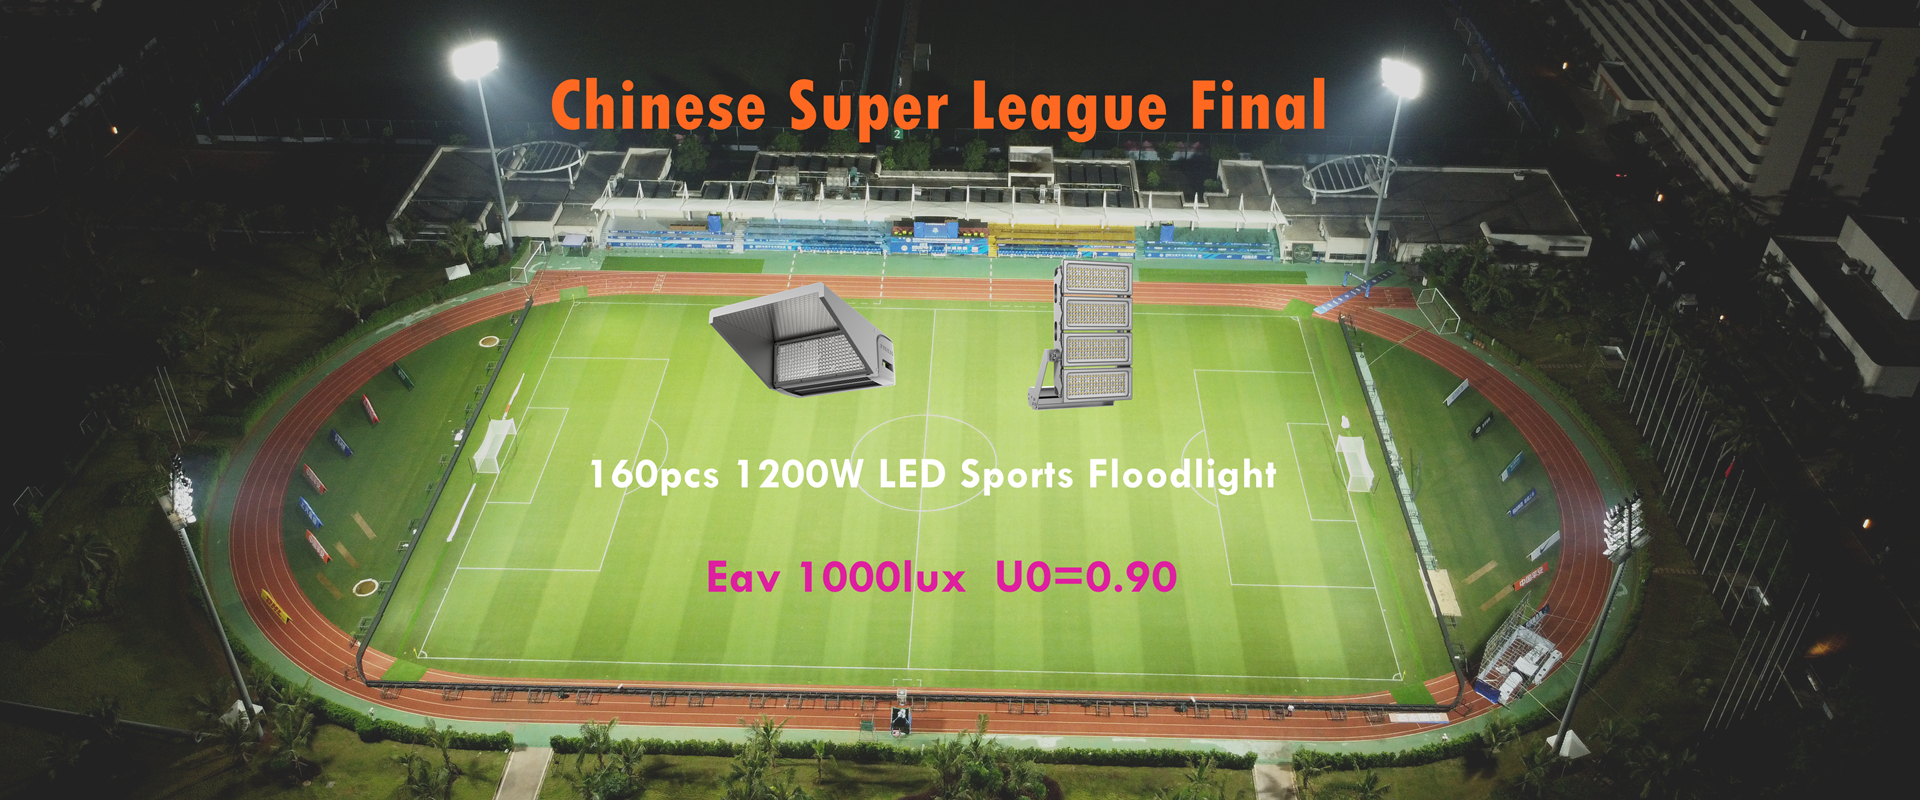 1200W LED sportsprojektør til kinesisk superliga 2022 i Haikou fodboldstadion